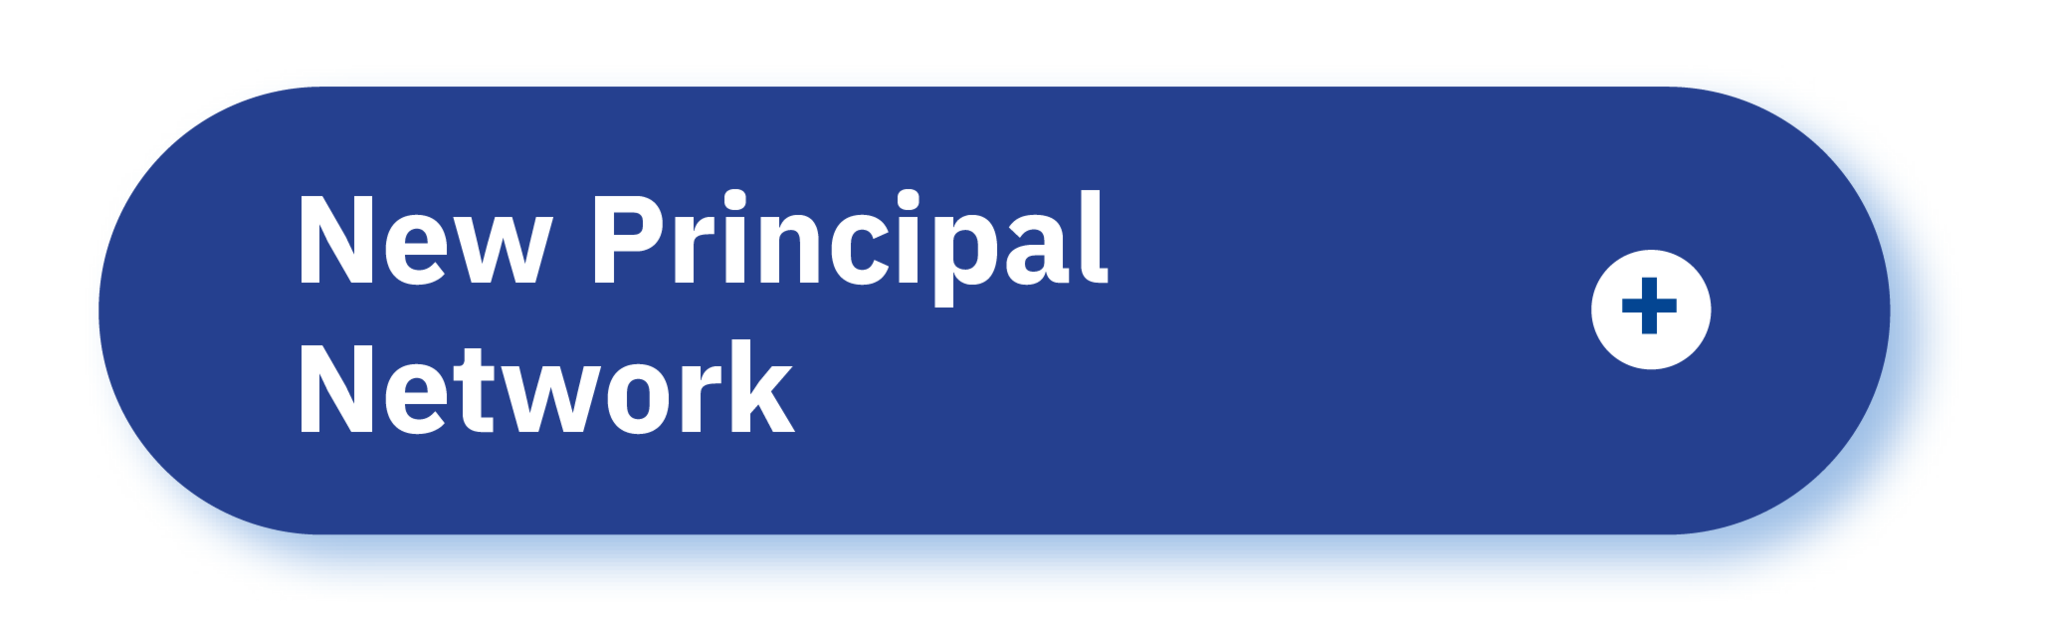 New Principal Network